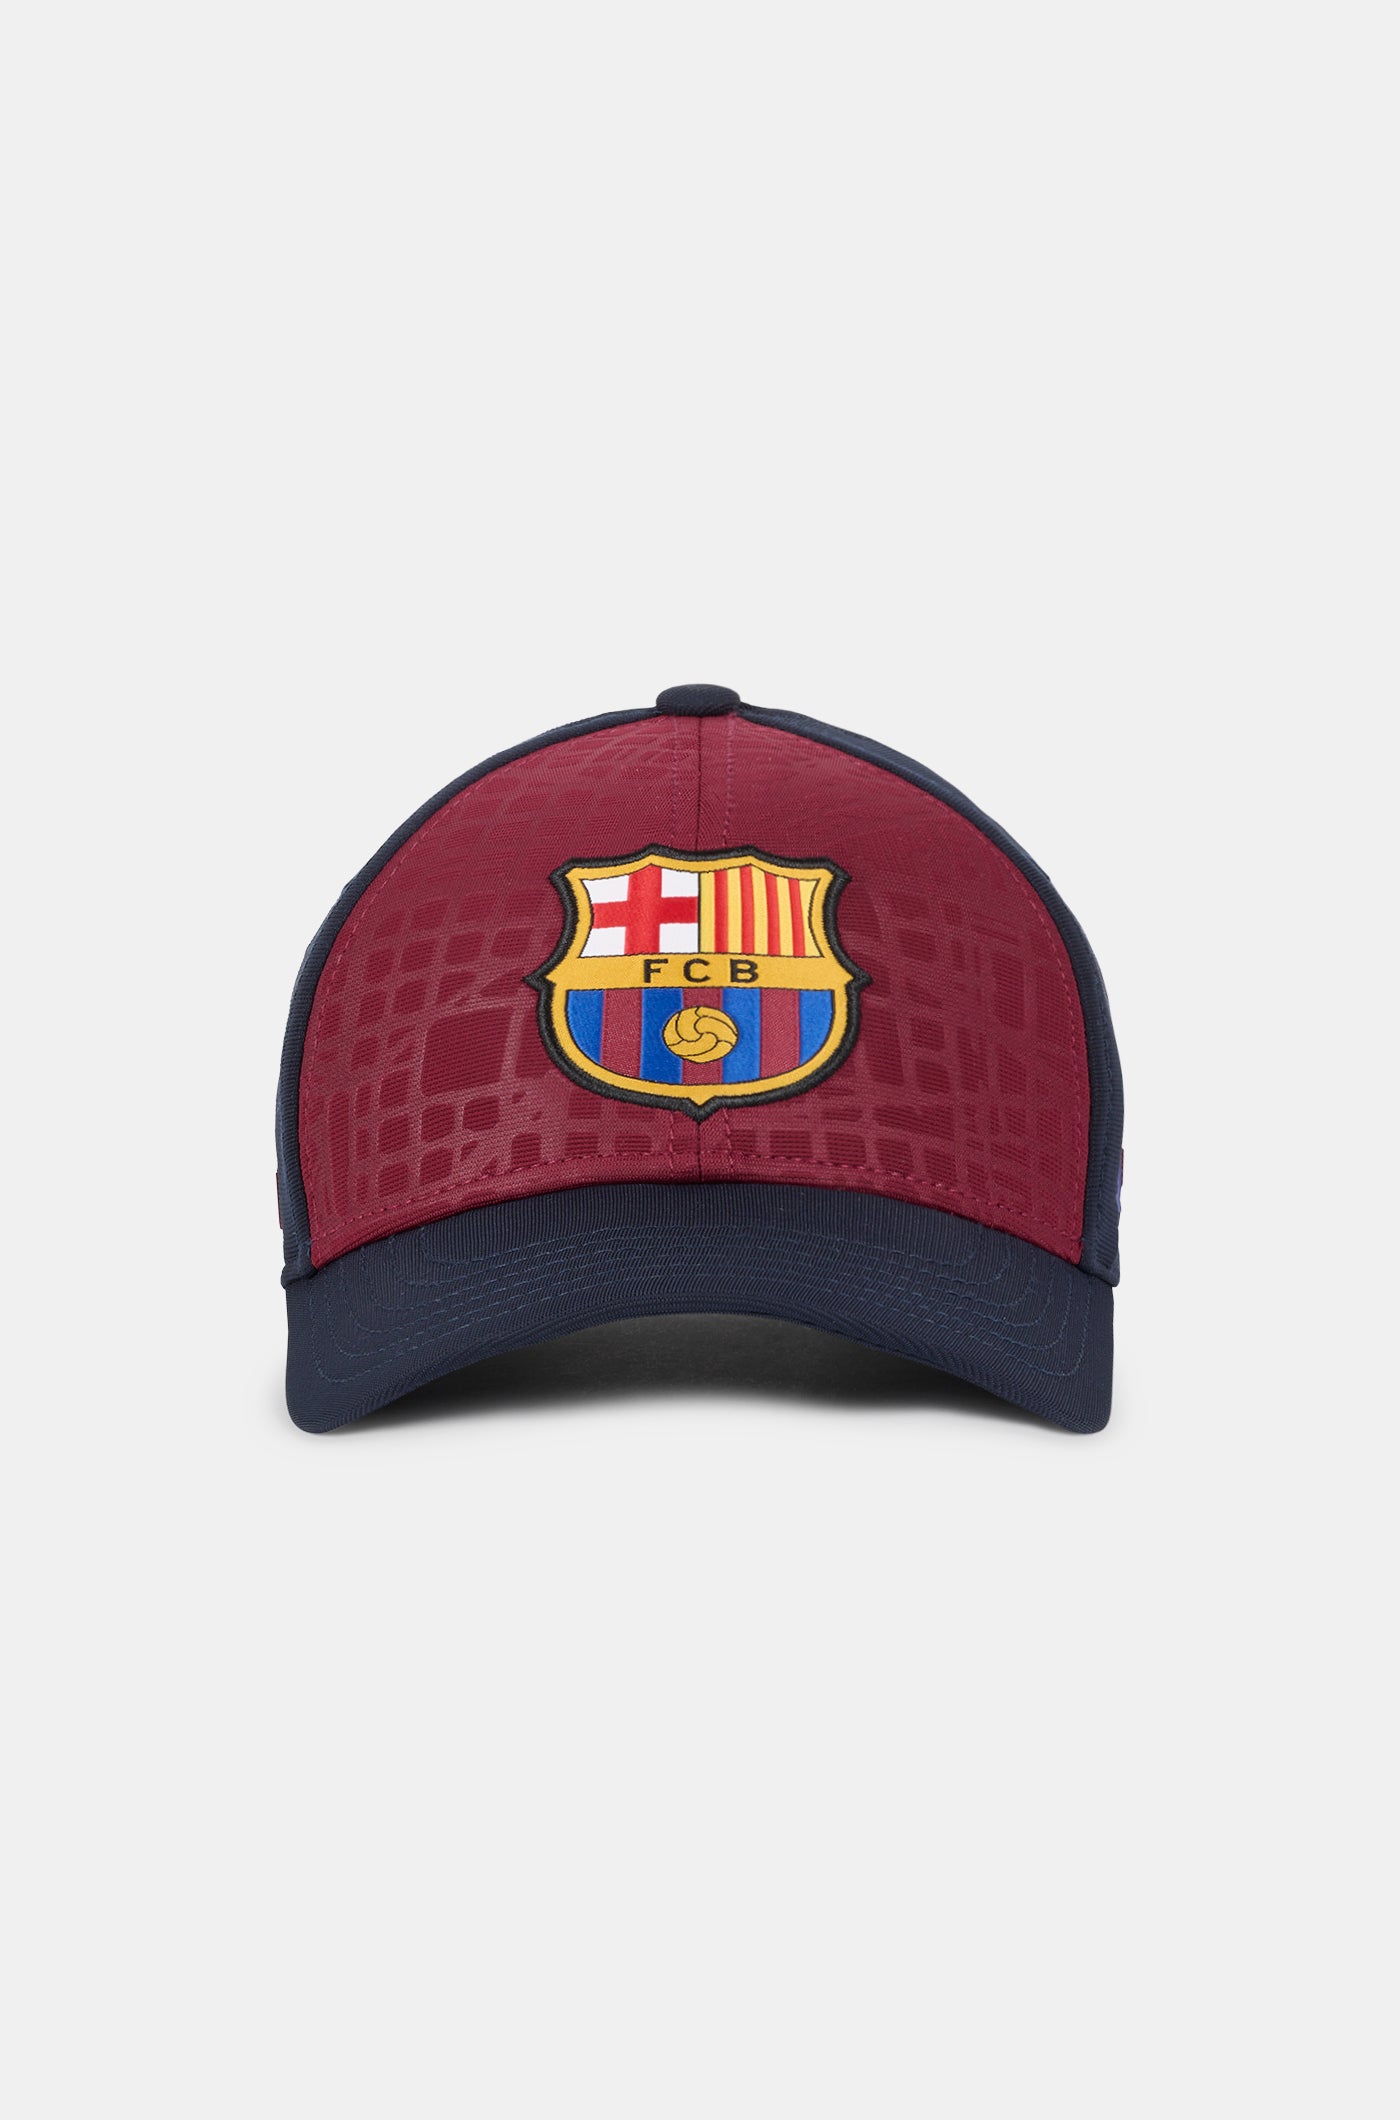 FC Barcelona-Kappe mit Wappen 1899 